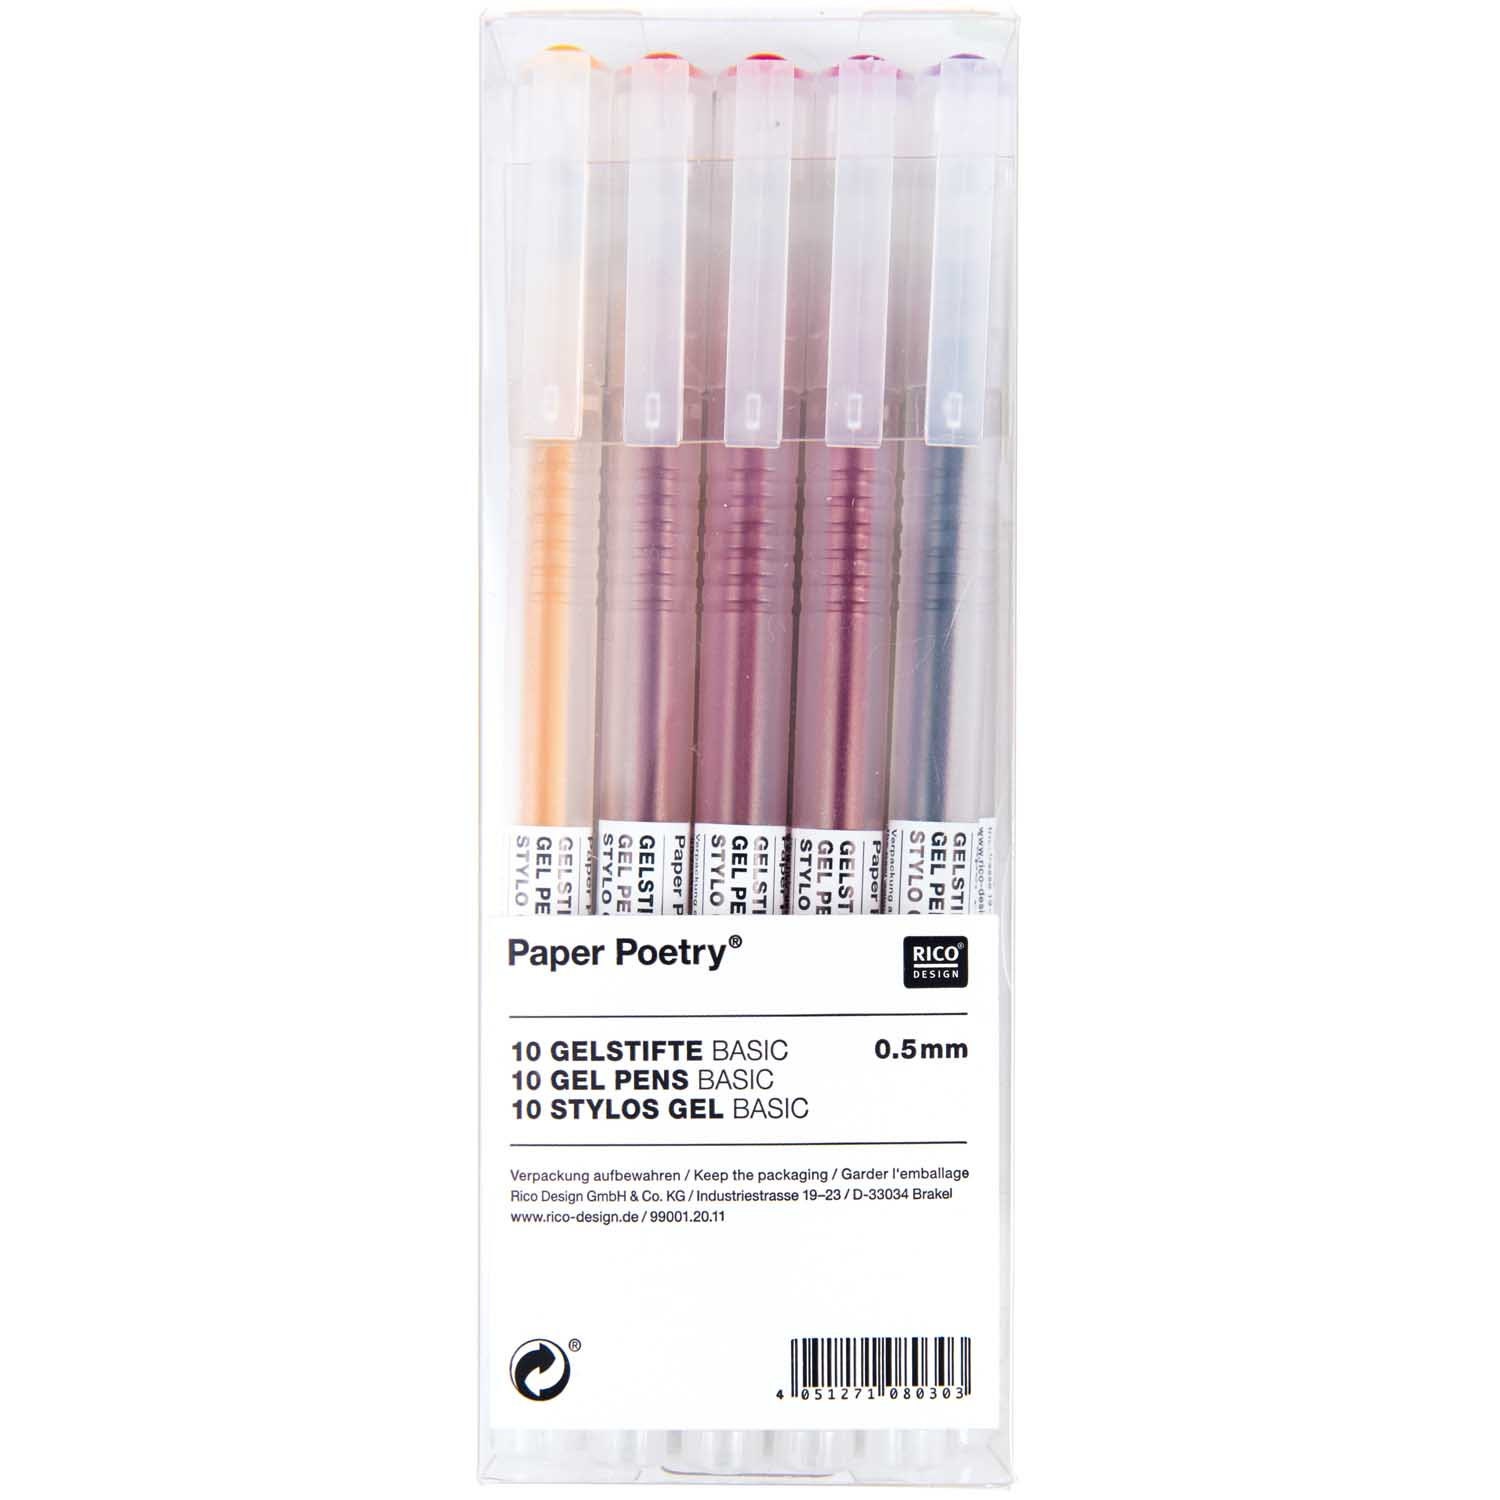 10 Color Kawaii Pens Cute Pens, Korean Colored Gel Ink Pens 